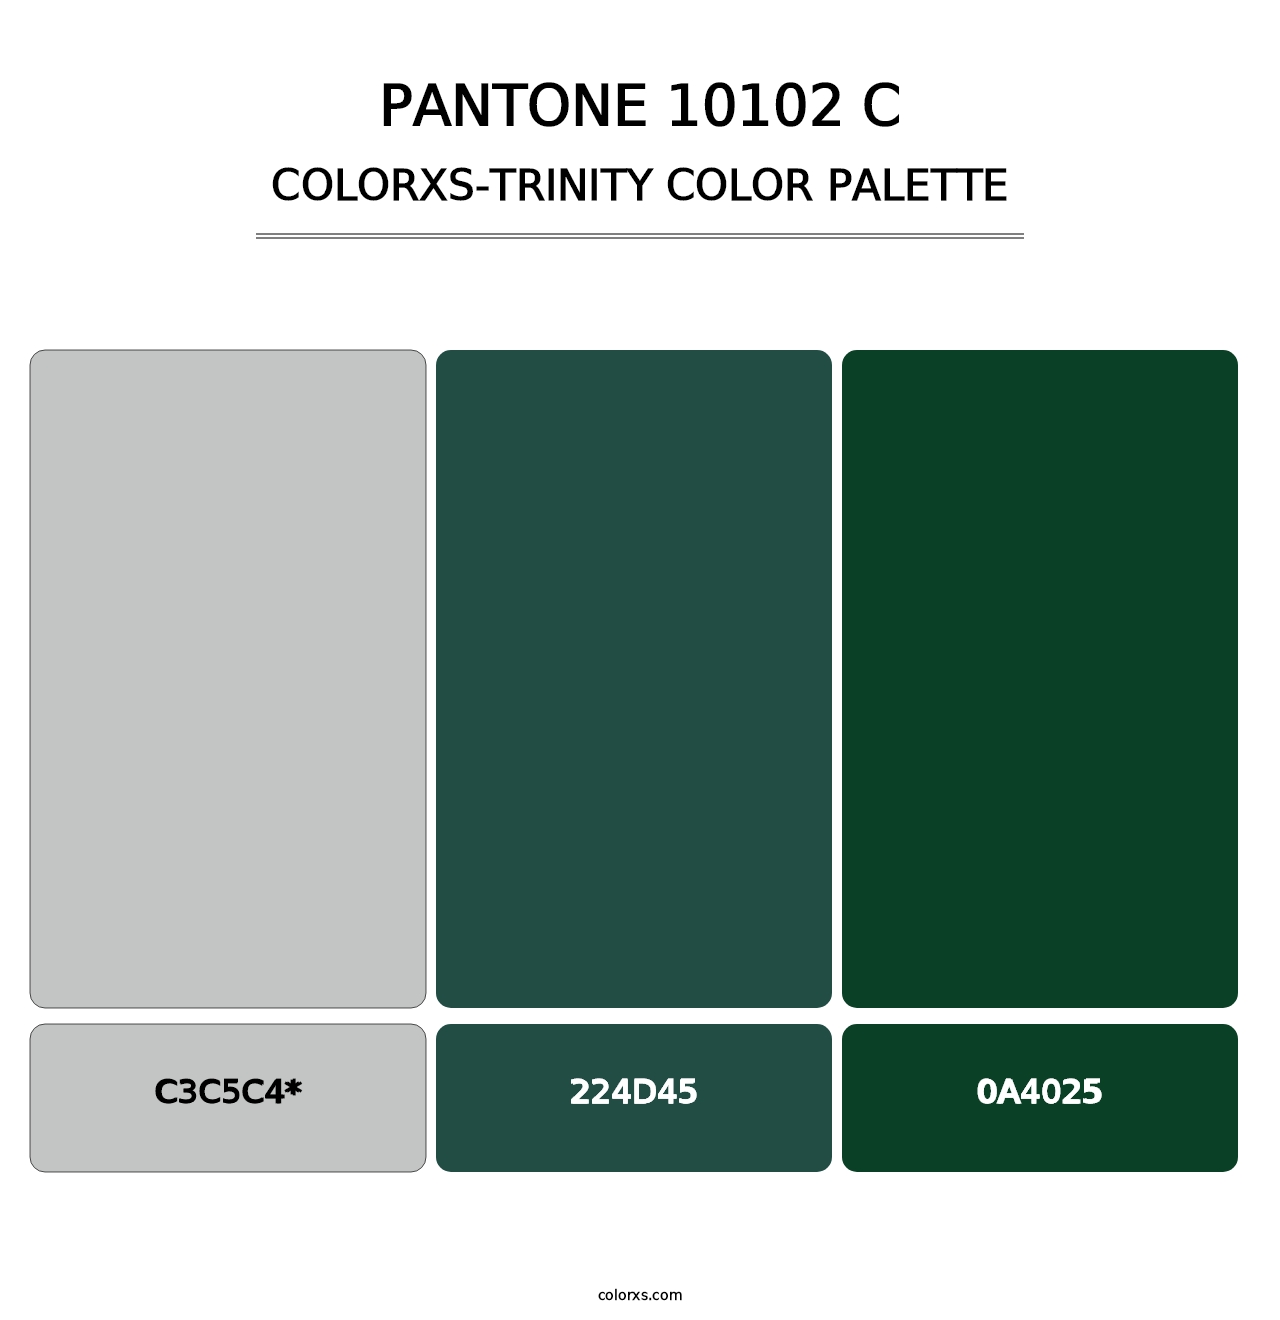 PANTONE 10102 C - Colorxs Trinity Palette